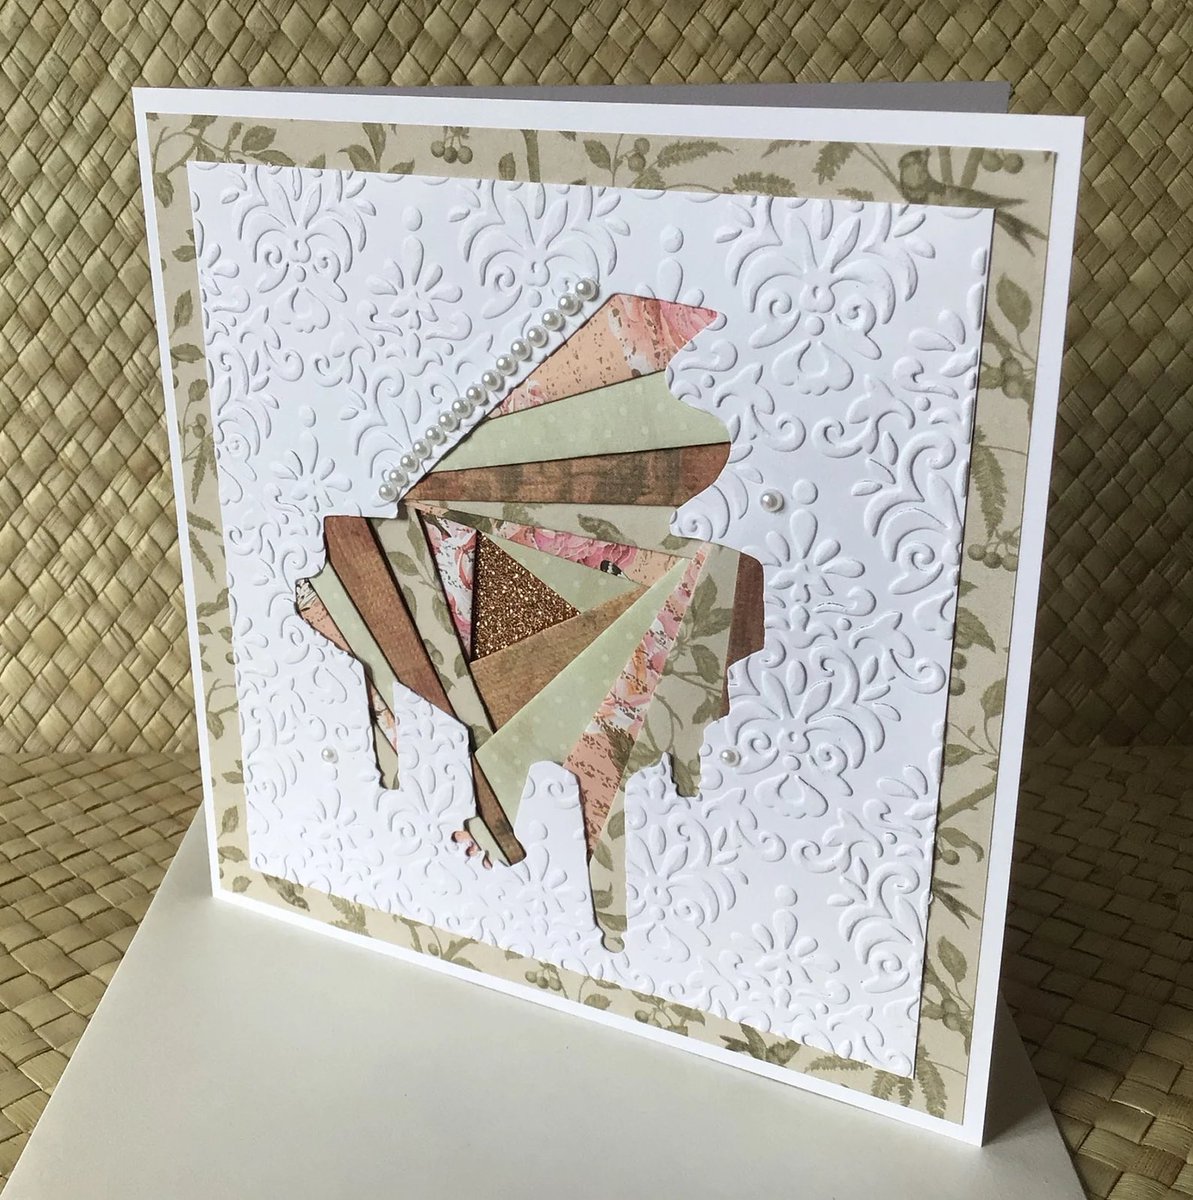 Grand Piano Card, Iris Folding Greeting, Pianist Birthday or Congratulations Gift etsy.me/3U9QVWn 

#bizhour #bizbubble #UKMakers #pianomagic #handmadeoriginals #OOAK